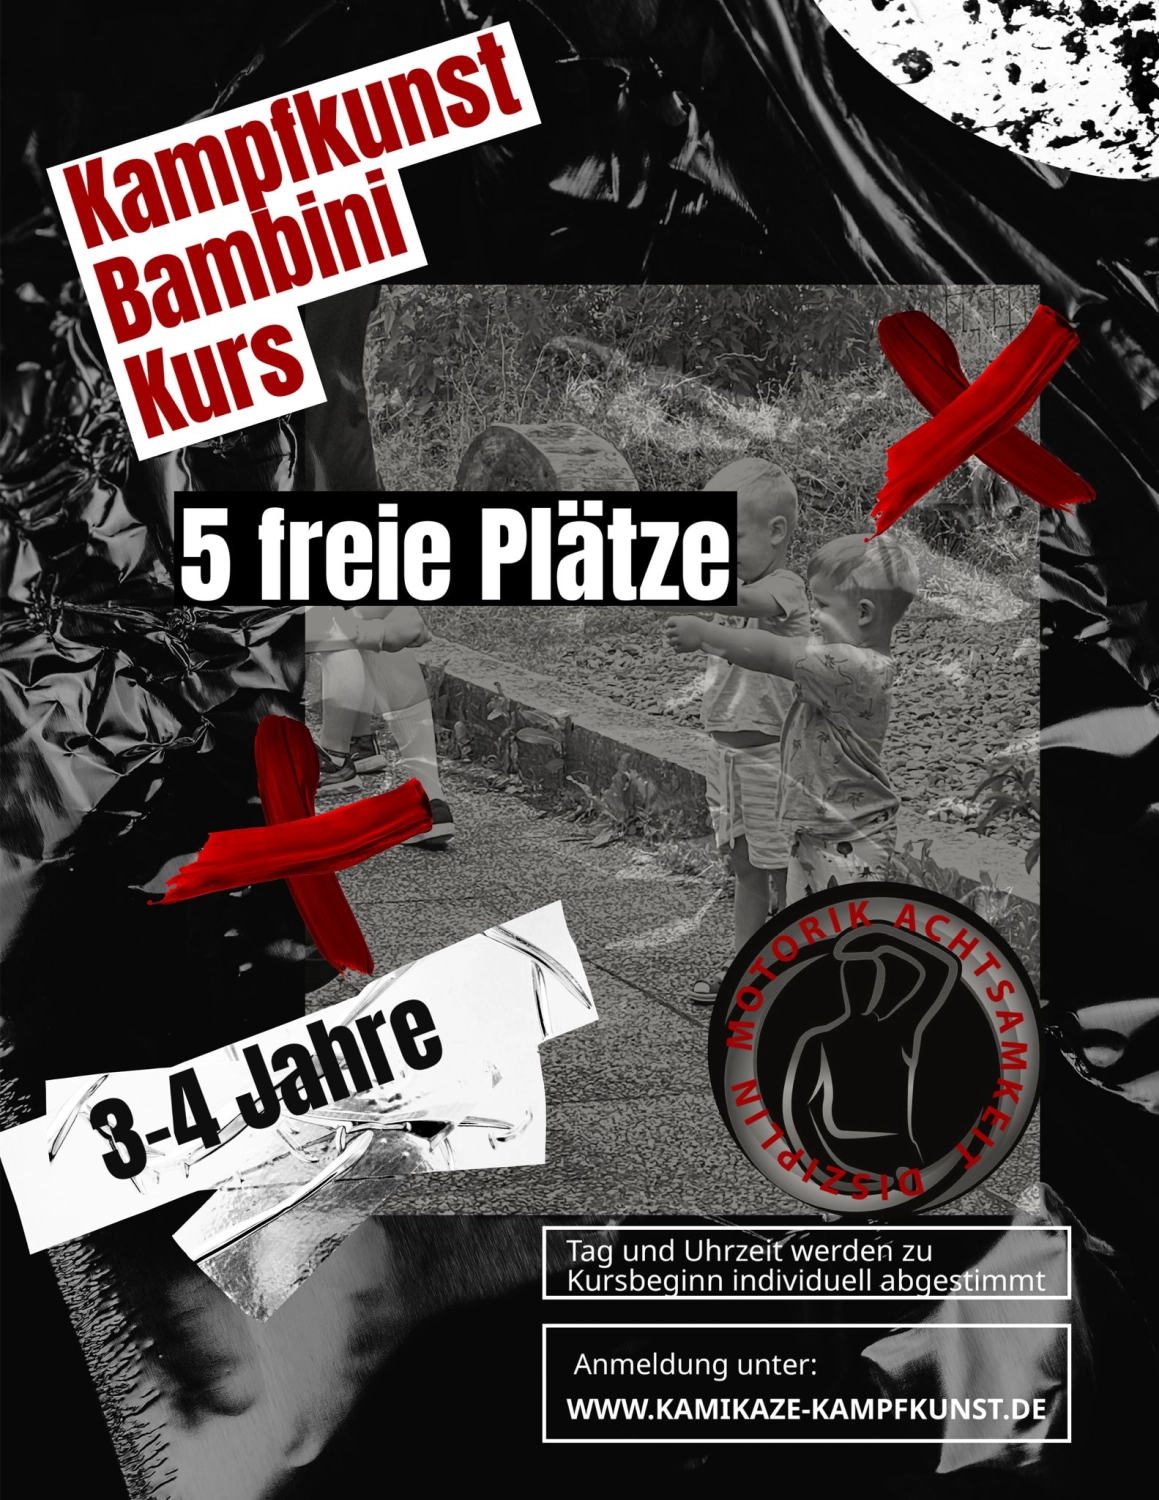 Kamikaze Kampfsport, Bambini Kampfsport Kurs Poster